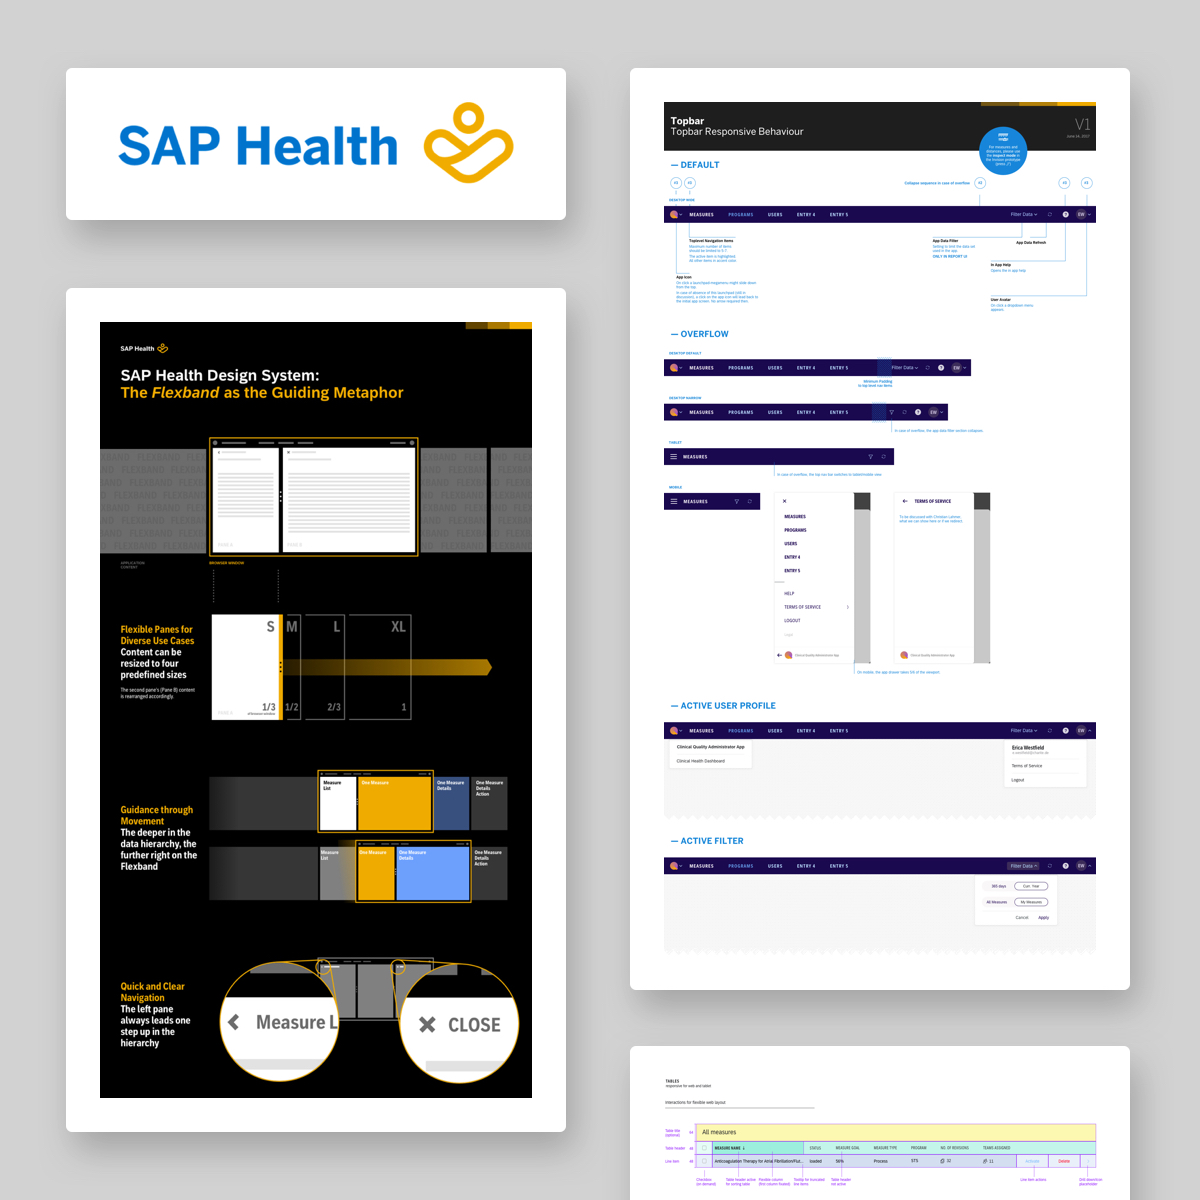 SAP Health Design System